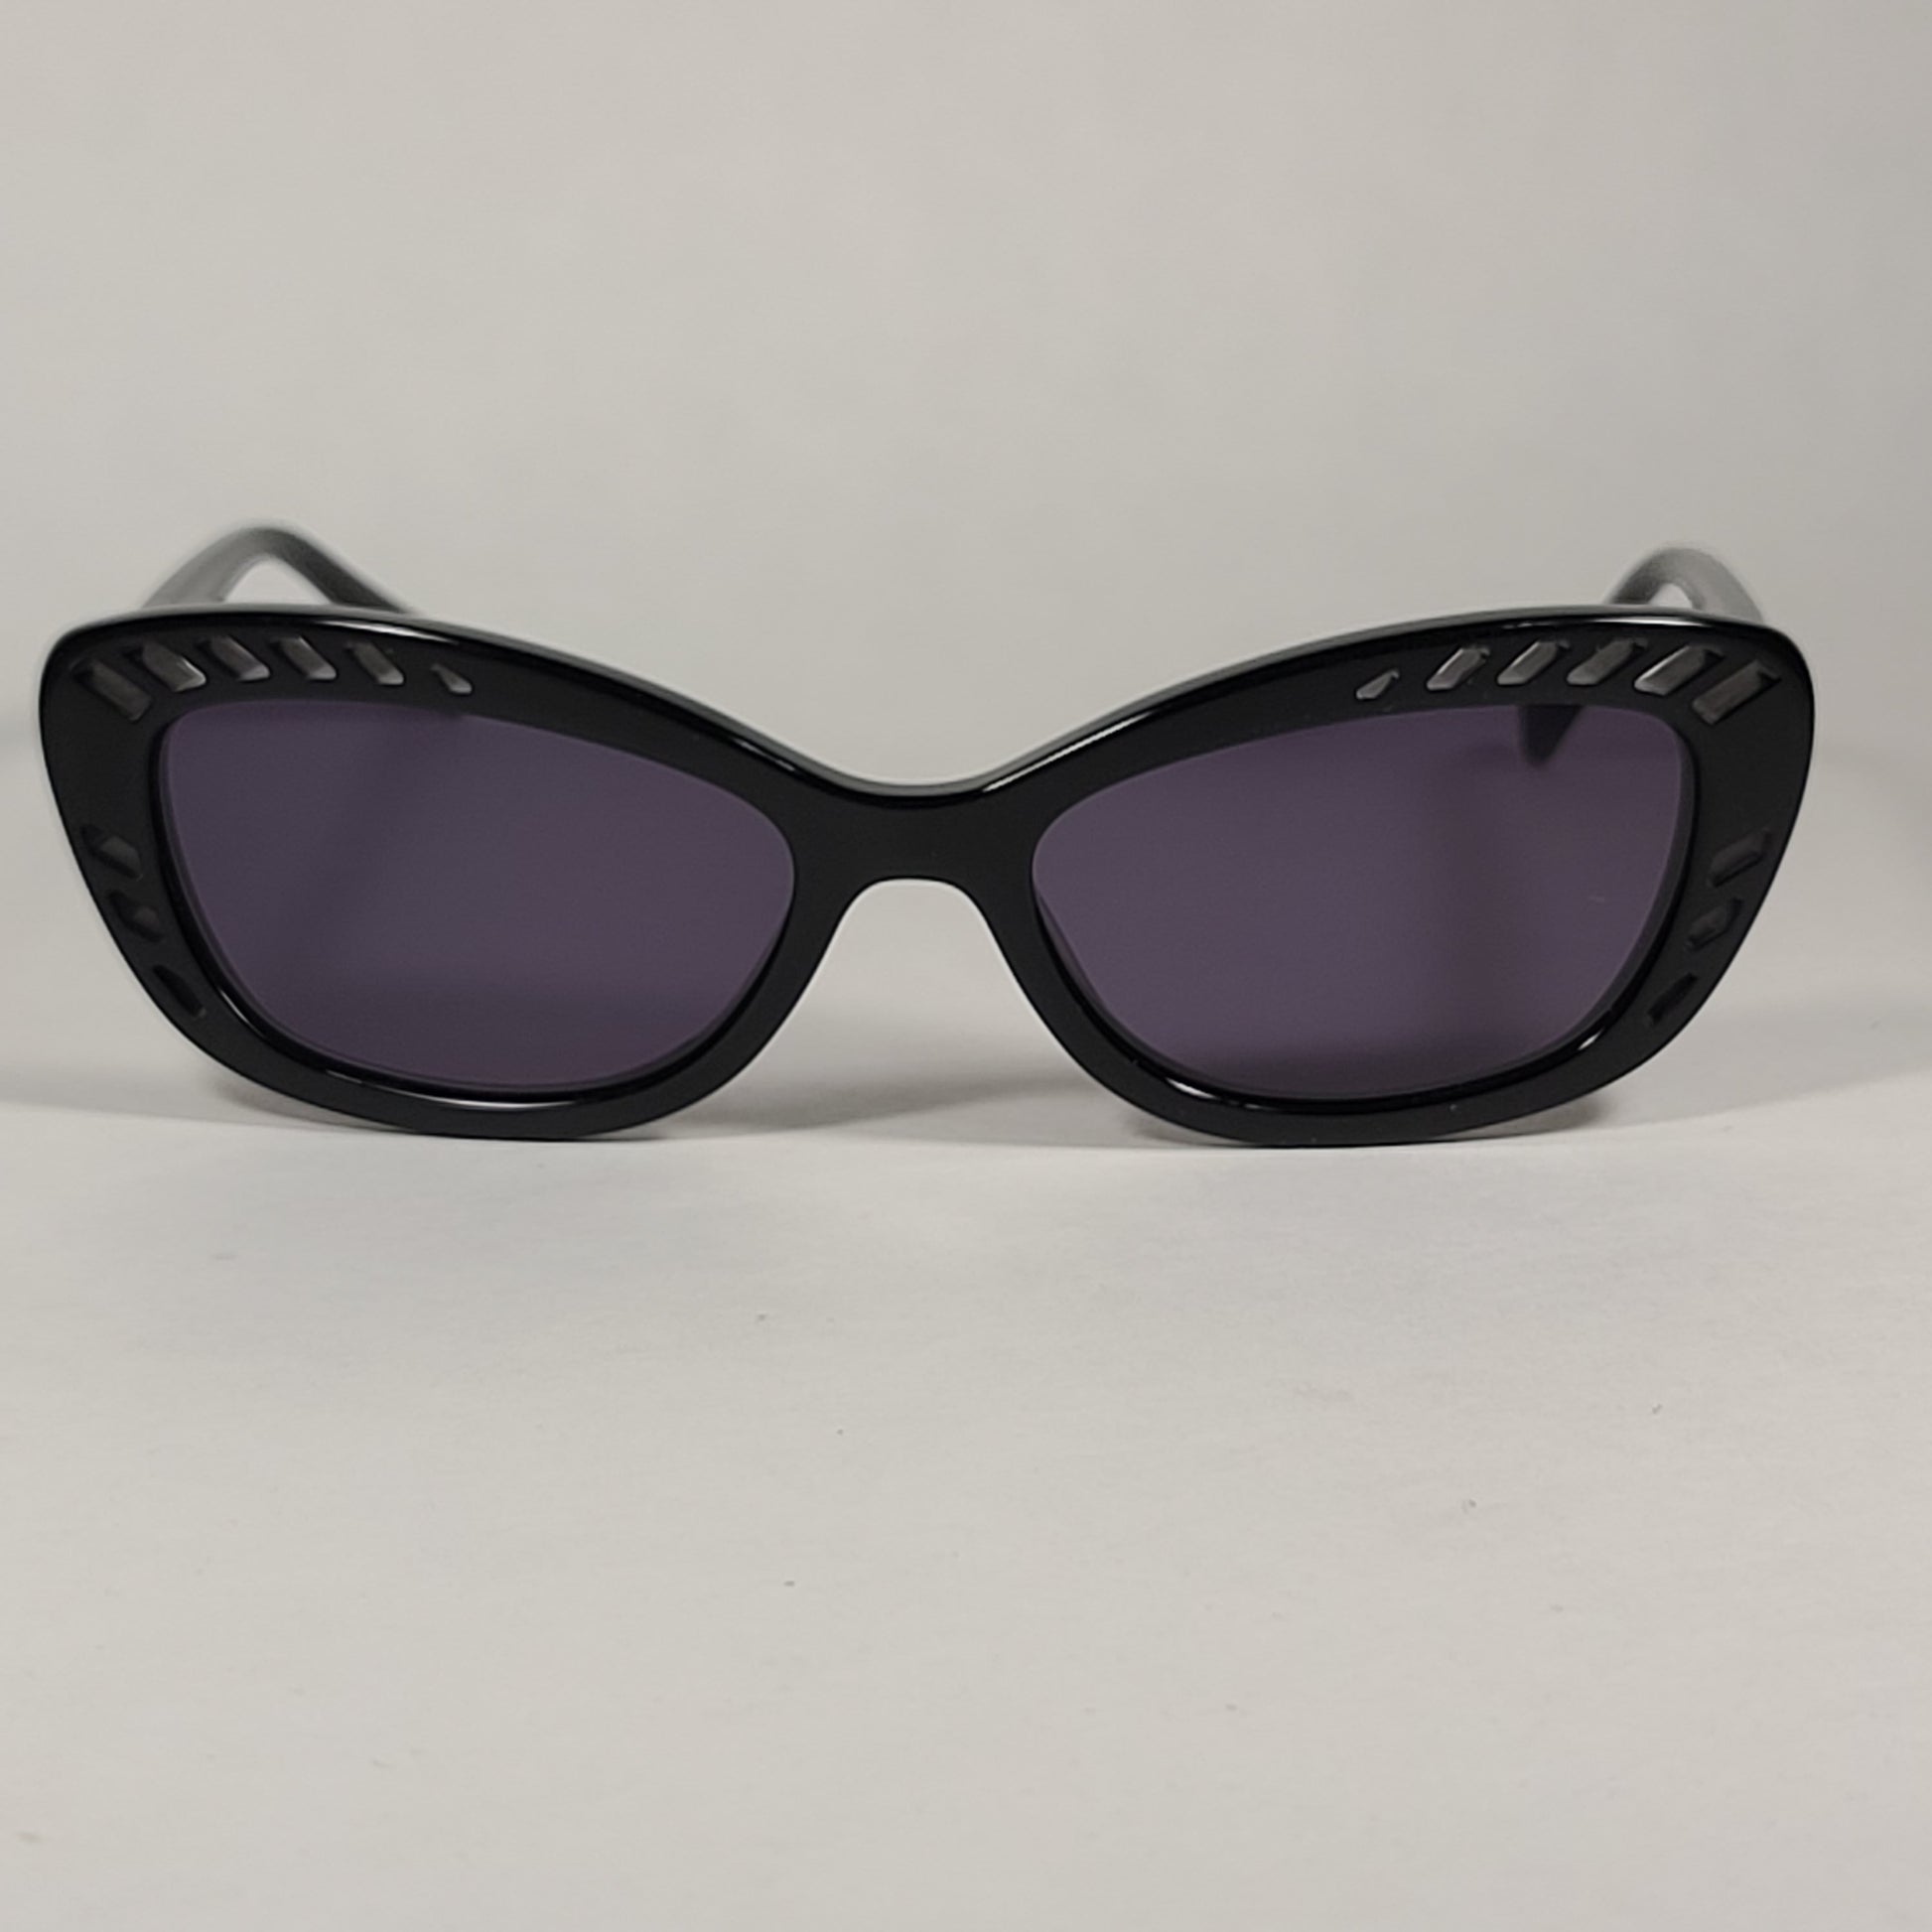 Authentic Kendall + Kylie Natalie Cat Eye Sunglasses Shiny Black Frame Gray Mono Lens KK5024 001 - Sunglasses